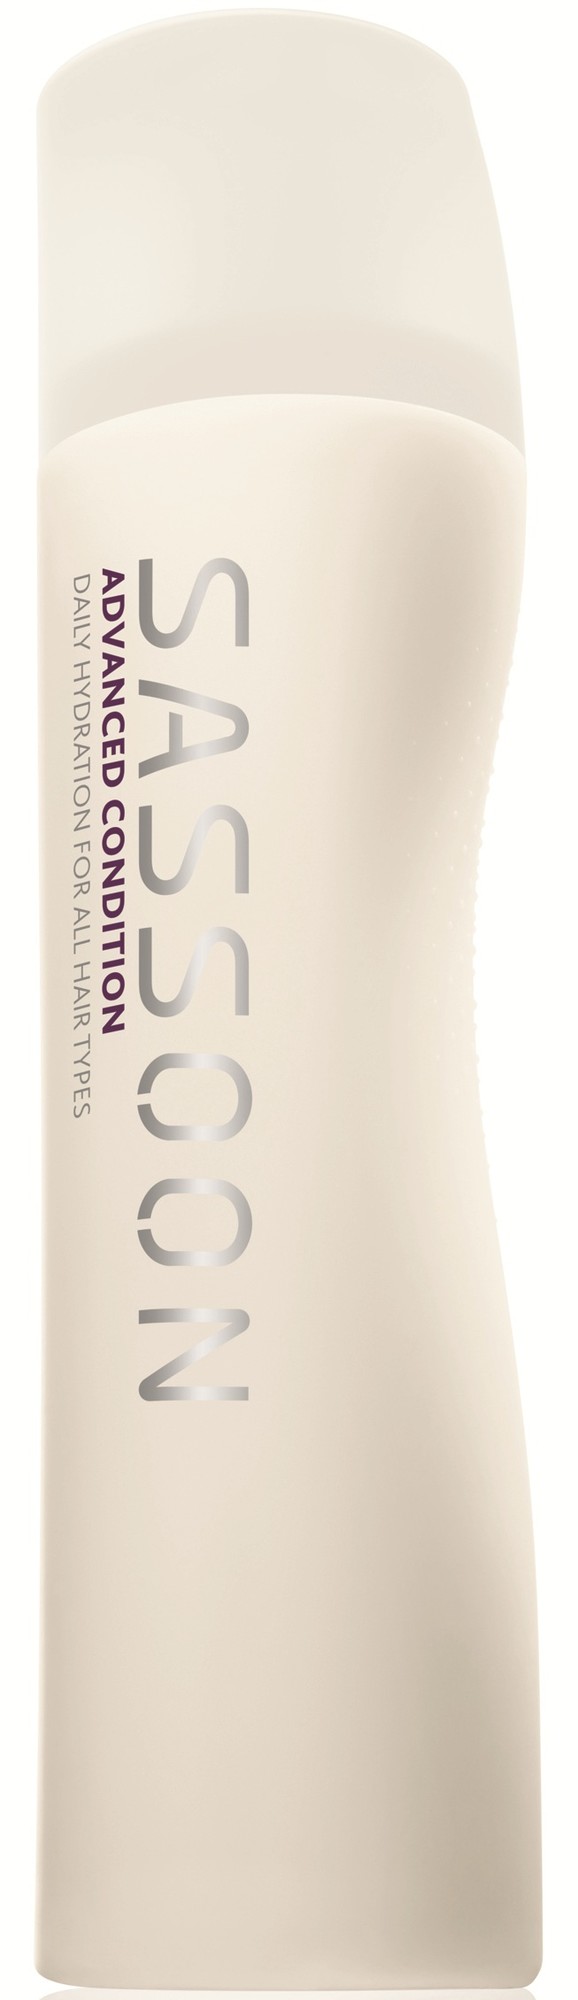 Sassoon Shampoo Care Advanced Condition 250ml